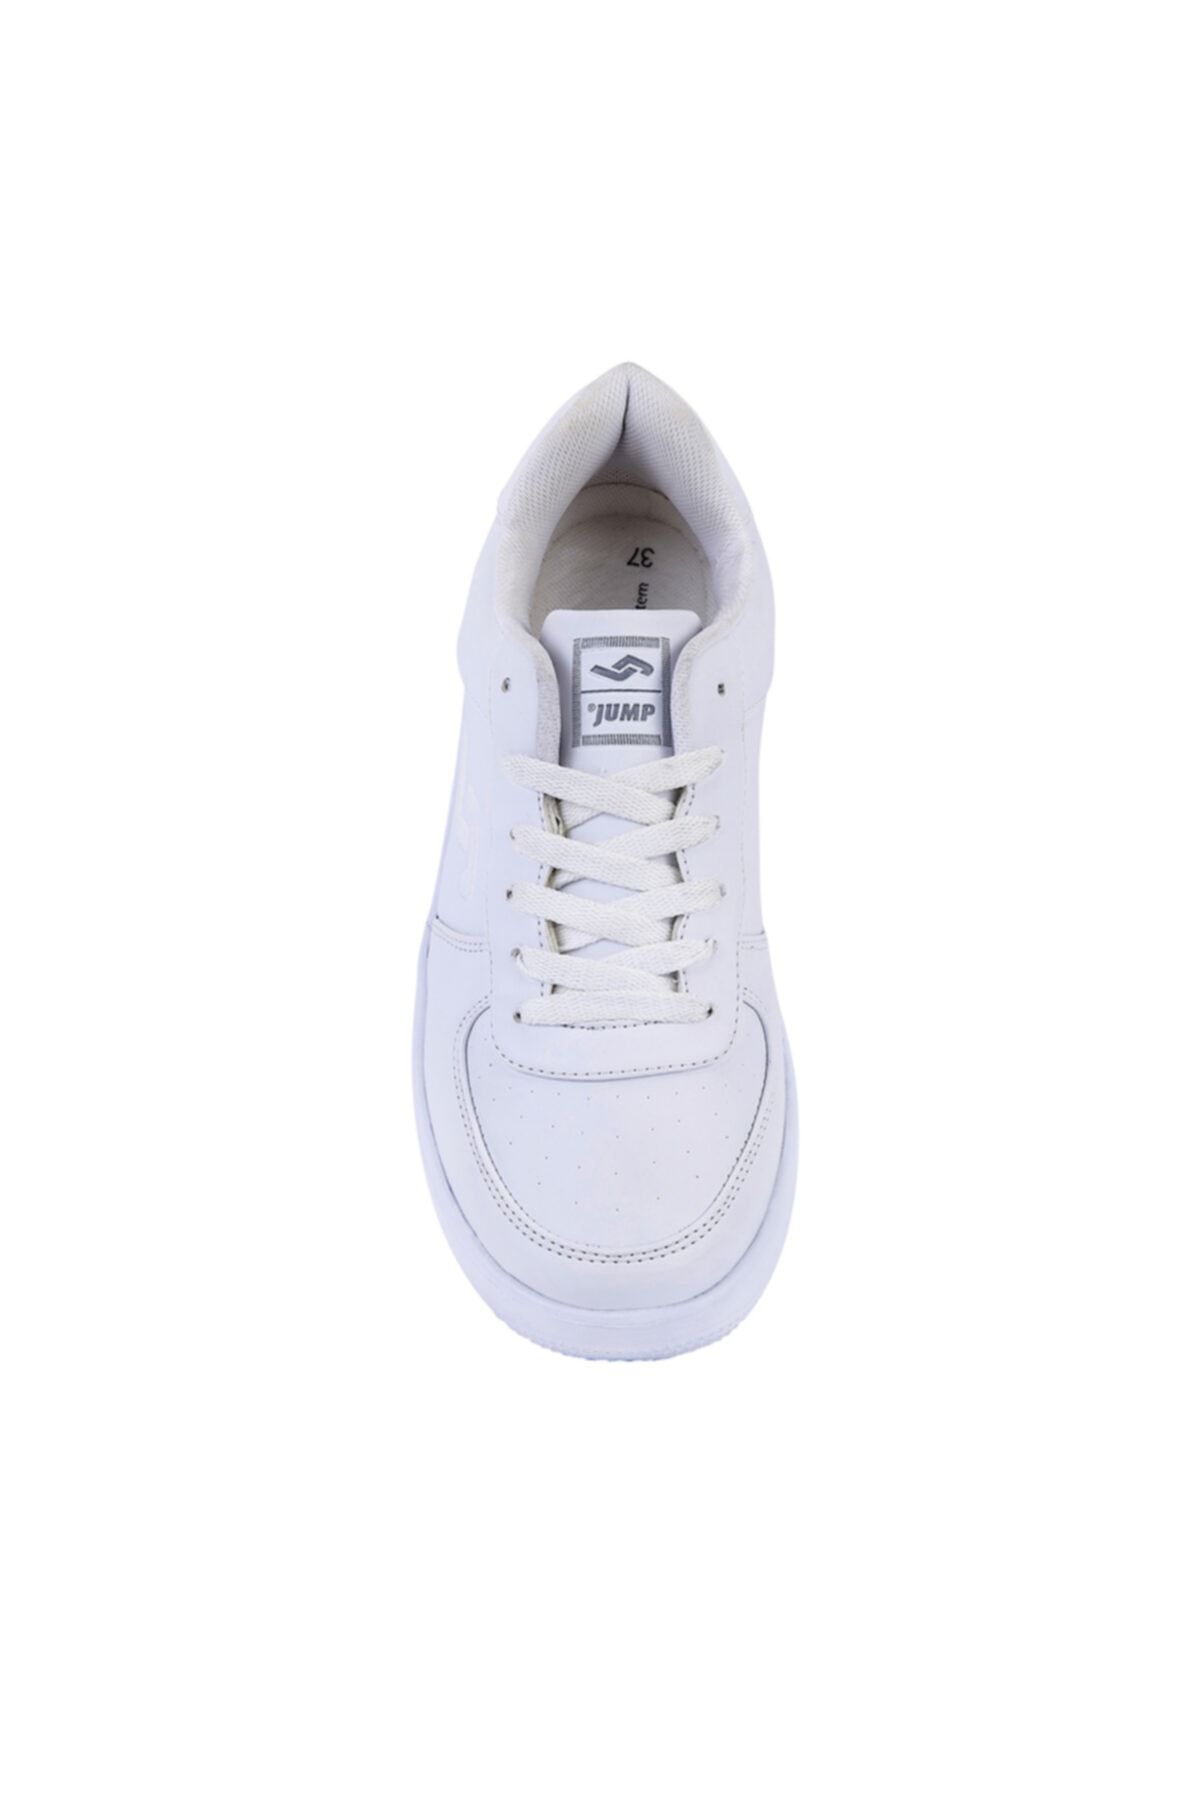 Jump 21516 کفش ورزشی ارتوپدی یونیسکس سفید.